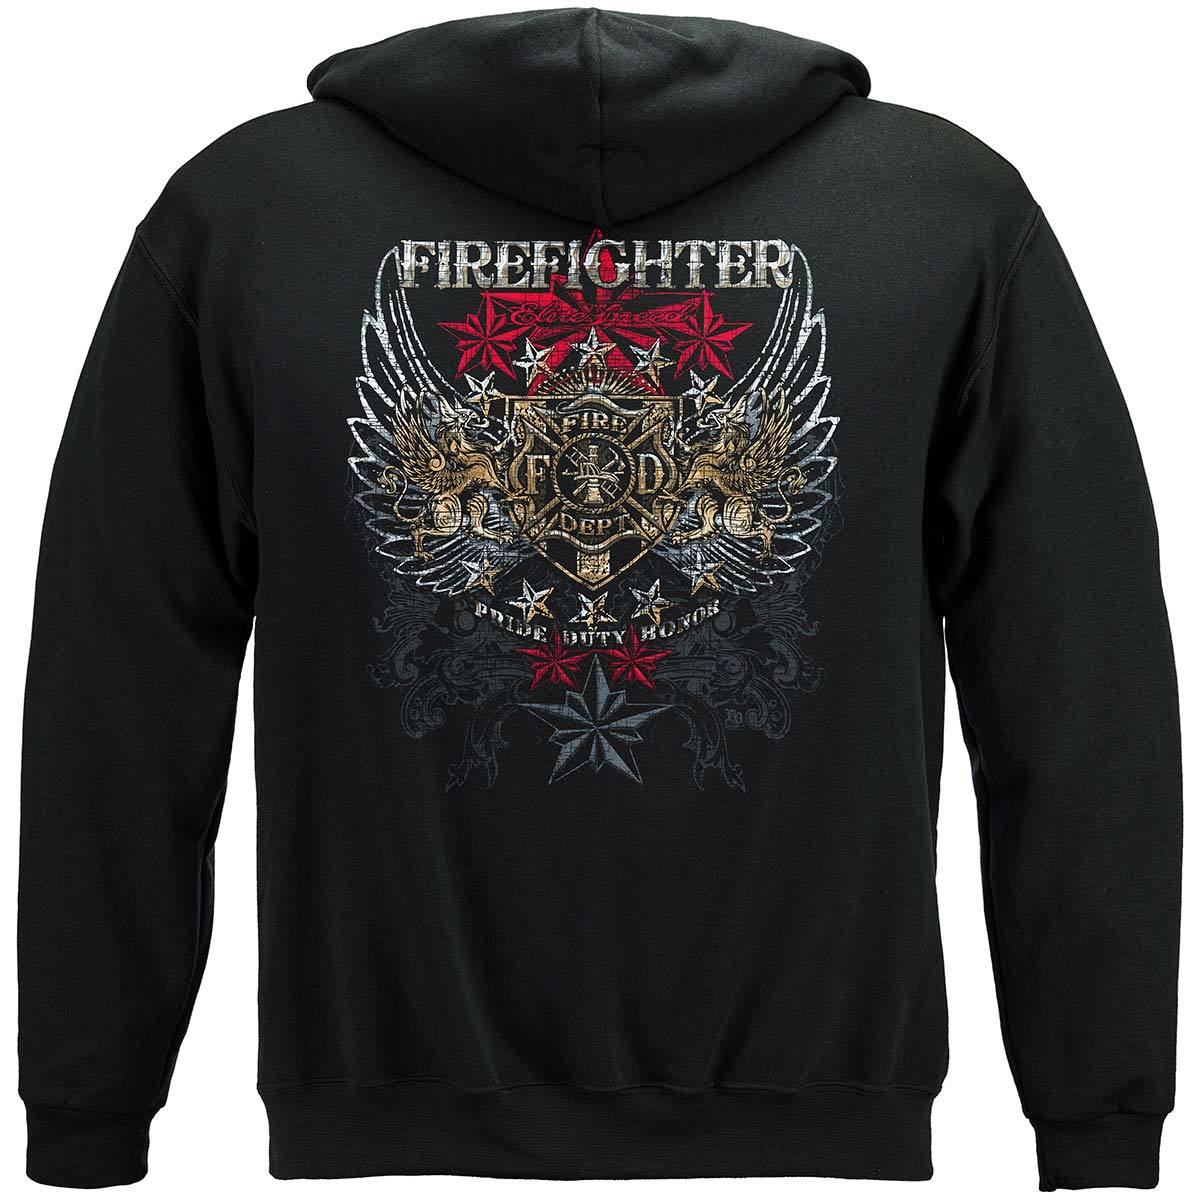 Elite Breed Firefighter Pride Duty Honor Silver Foil Premium T-Shirt